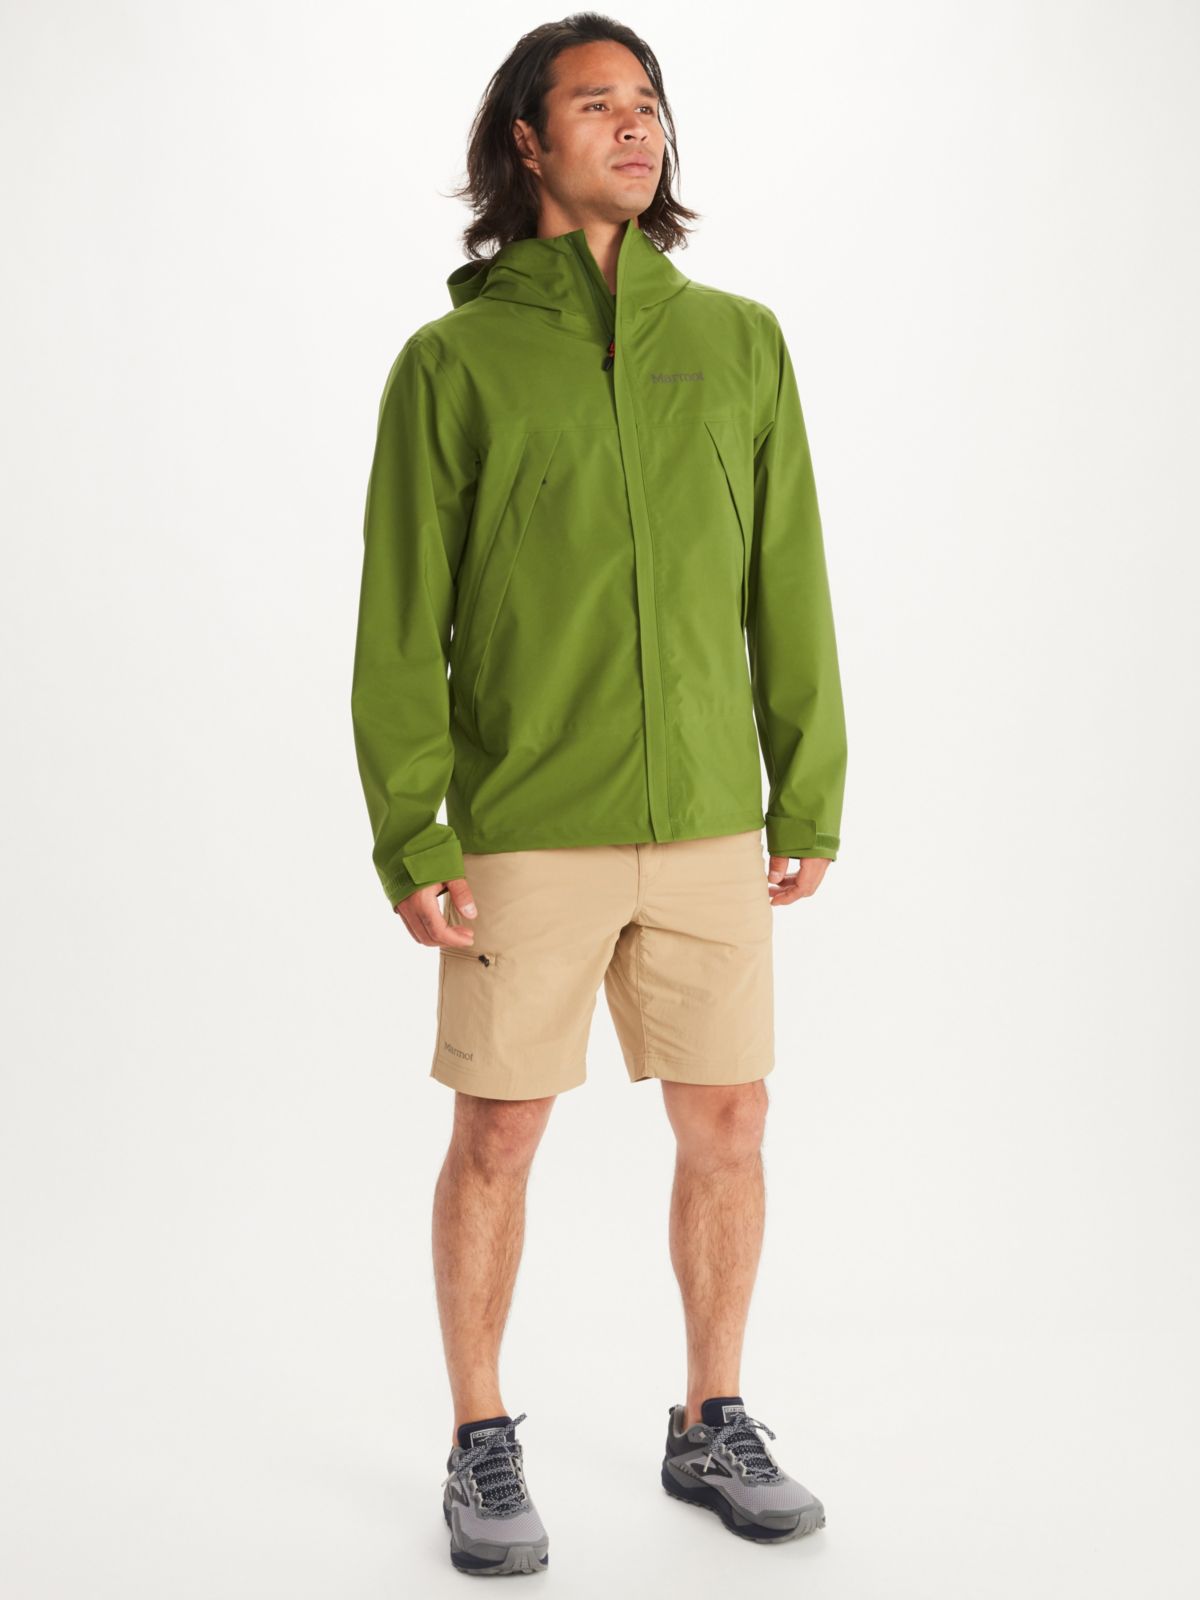 model wearing hiking jacket and hiking bottoms